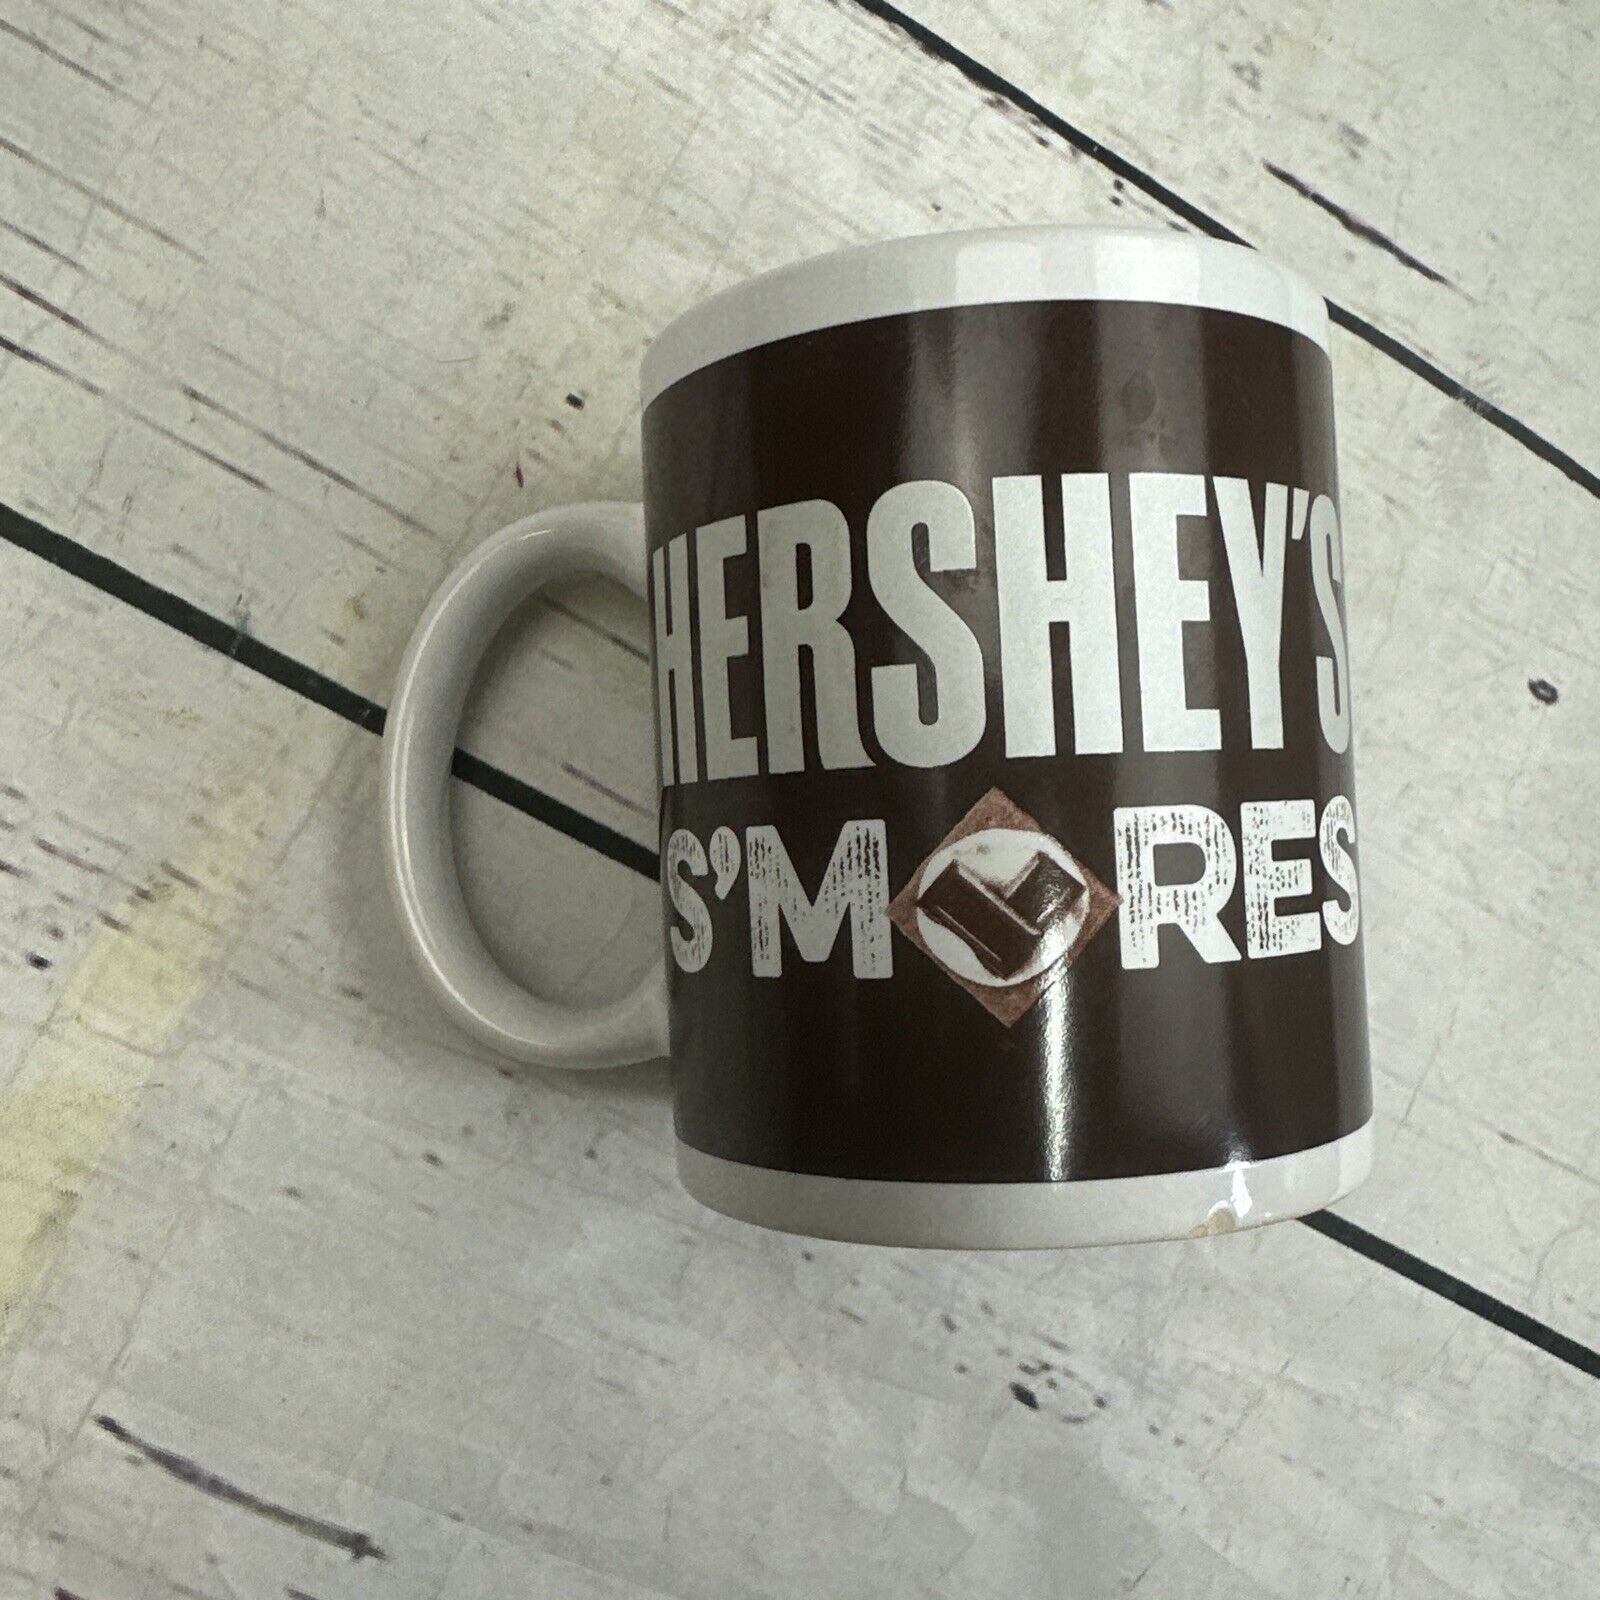 Hershey’s S’mores Coffee Tea Cup Mug Galerie microwave safe dishwasher safe